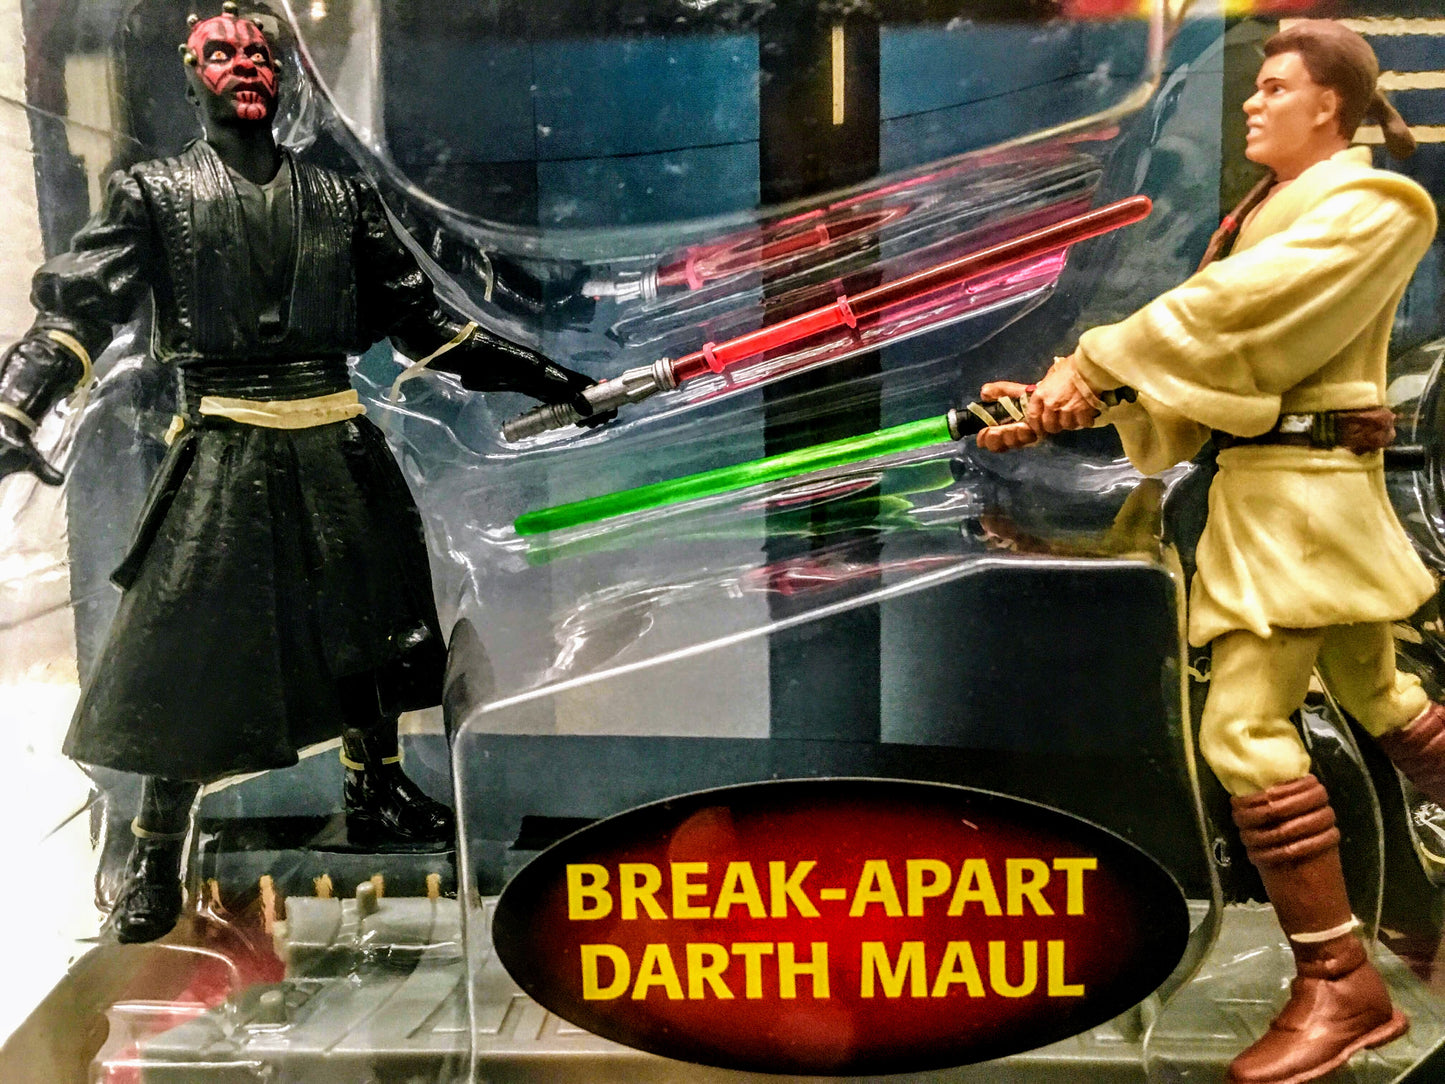 EP 1 Darth Maul vs. Obi-Wan Kenobi: The Final Lightsaber Duel